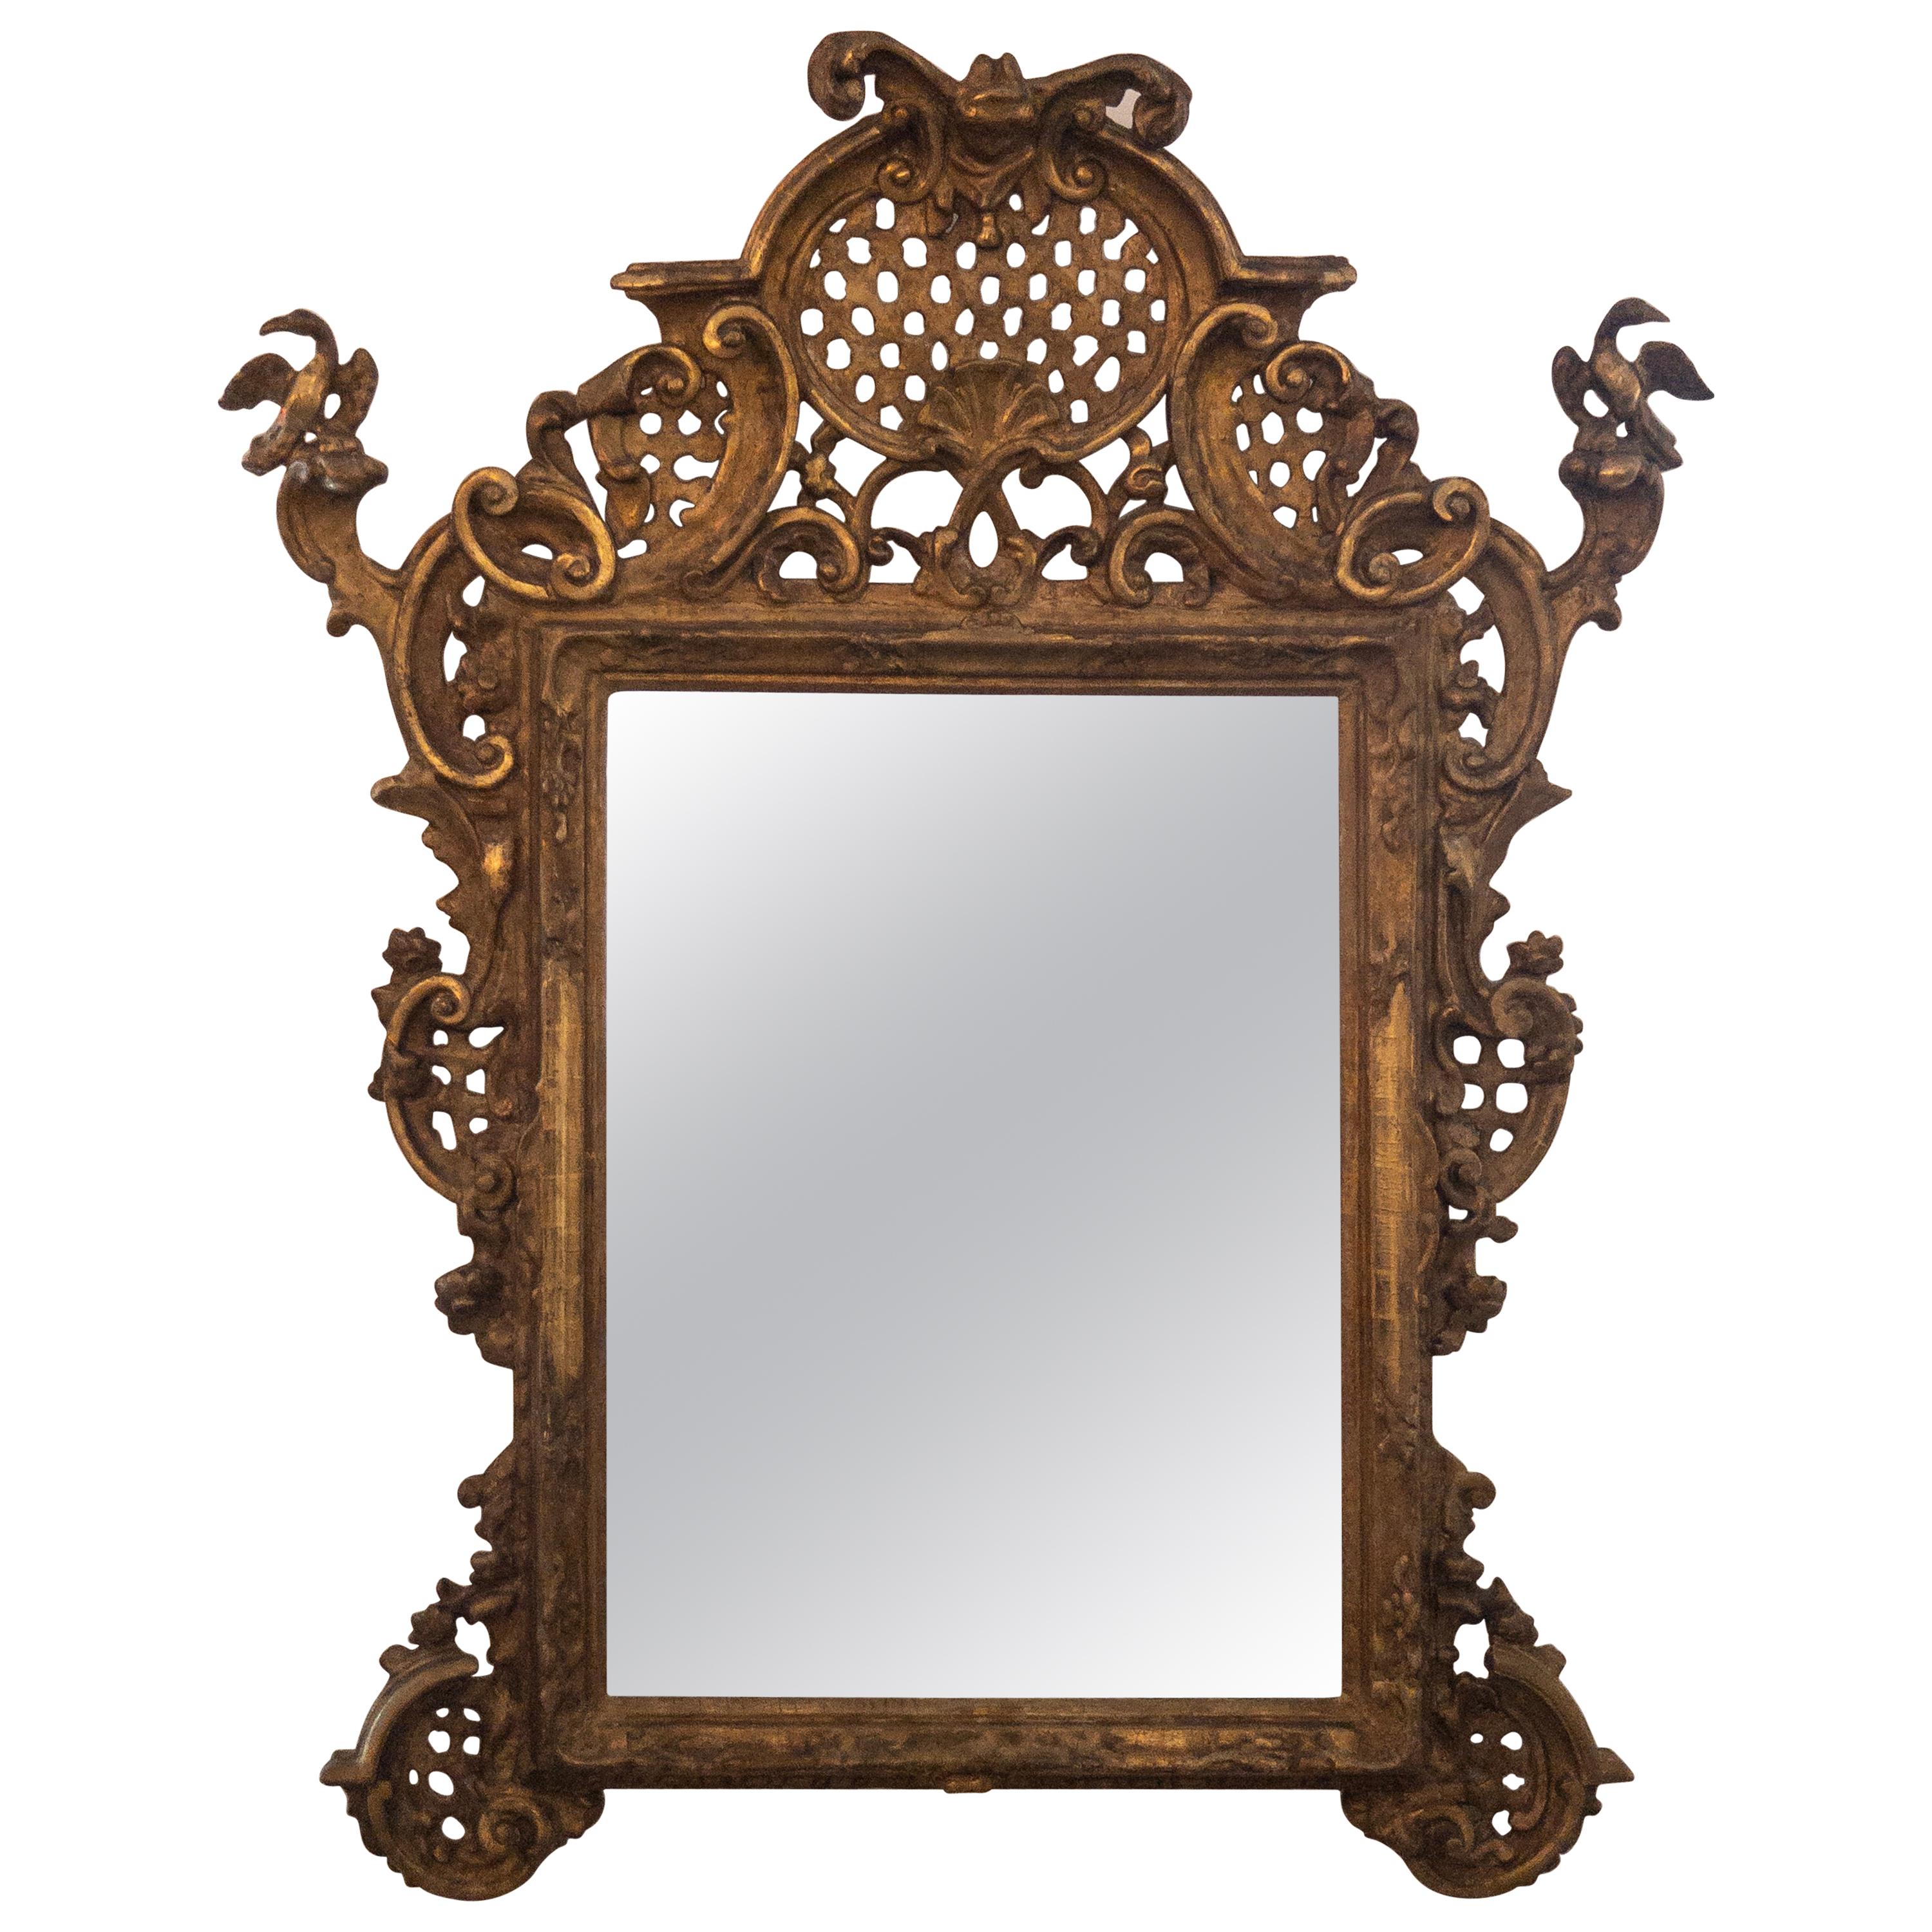 Original Antique Gilded Baroque Wall Mirror, 18th Century For Sale